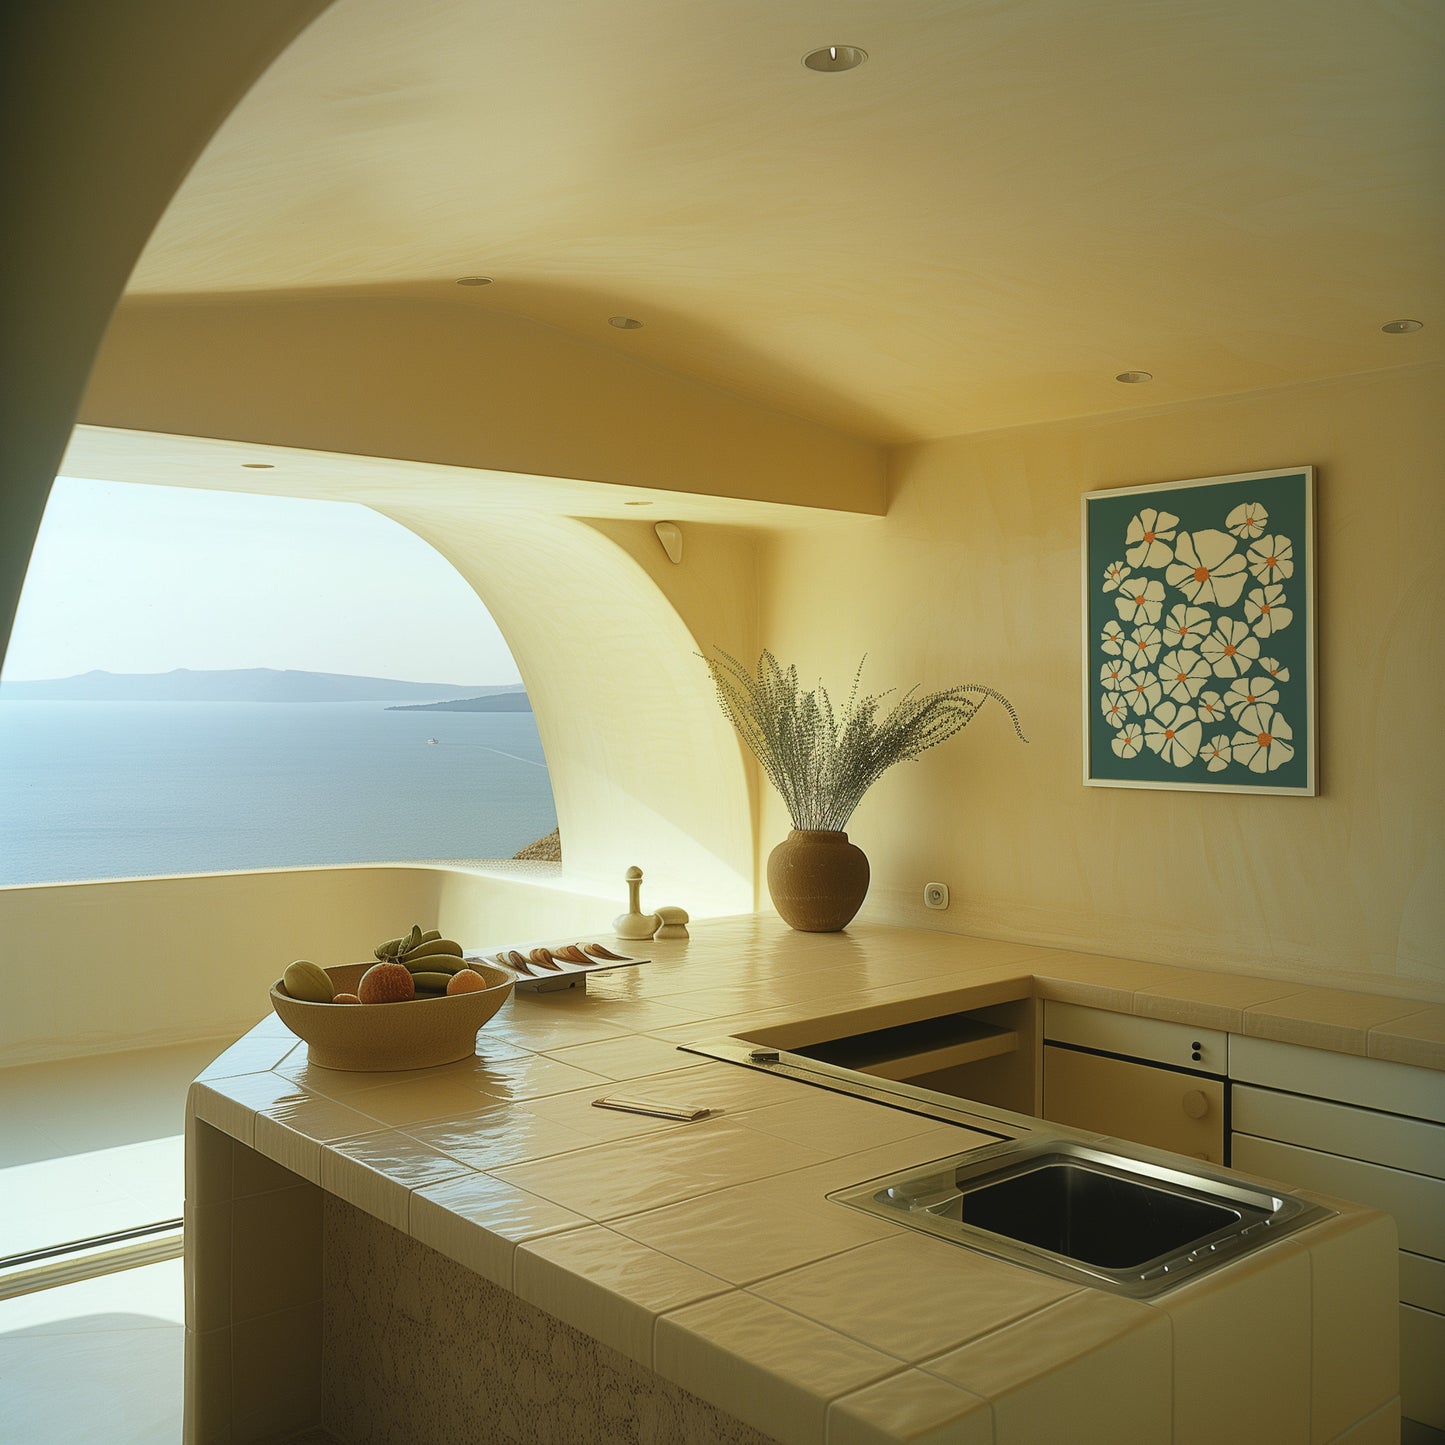 Modern kitchen with sleek design overlooking a sea view.